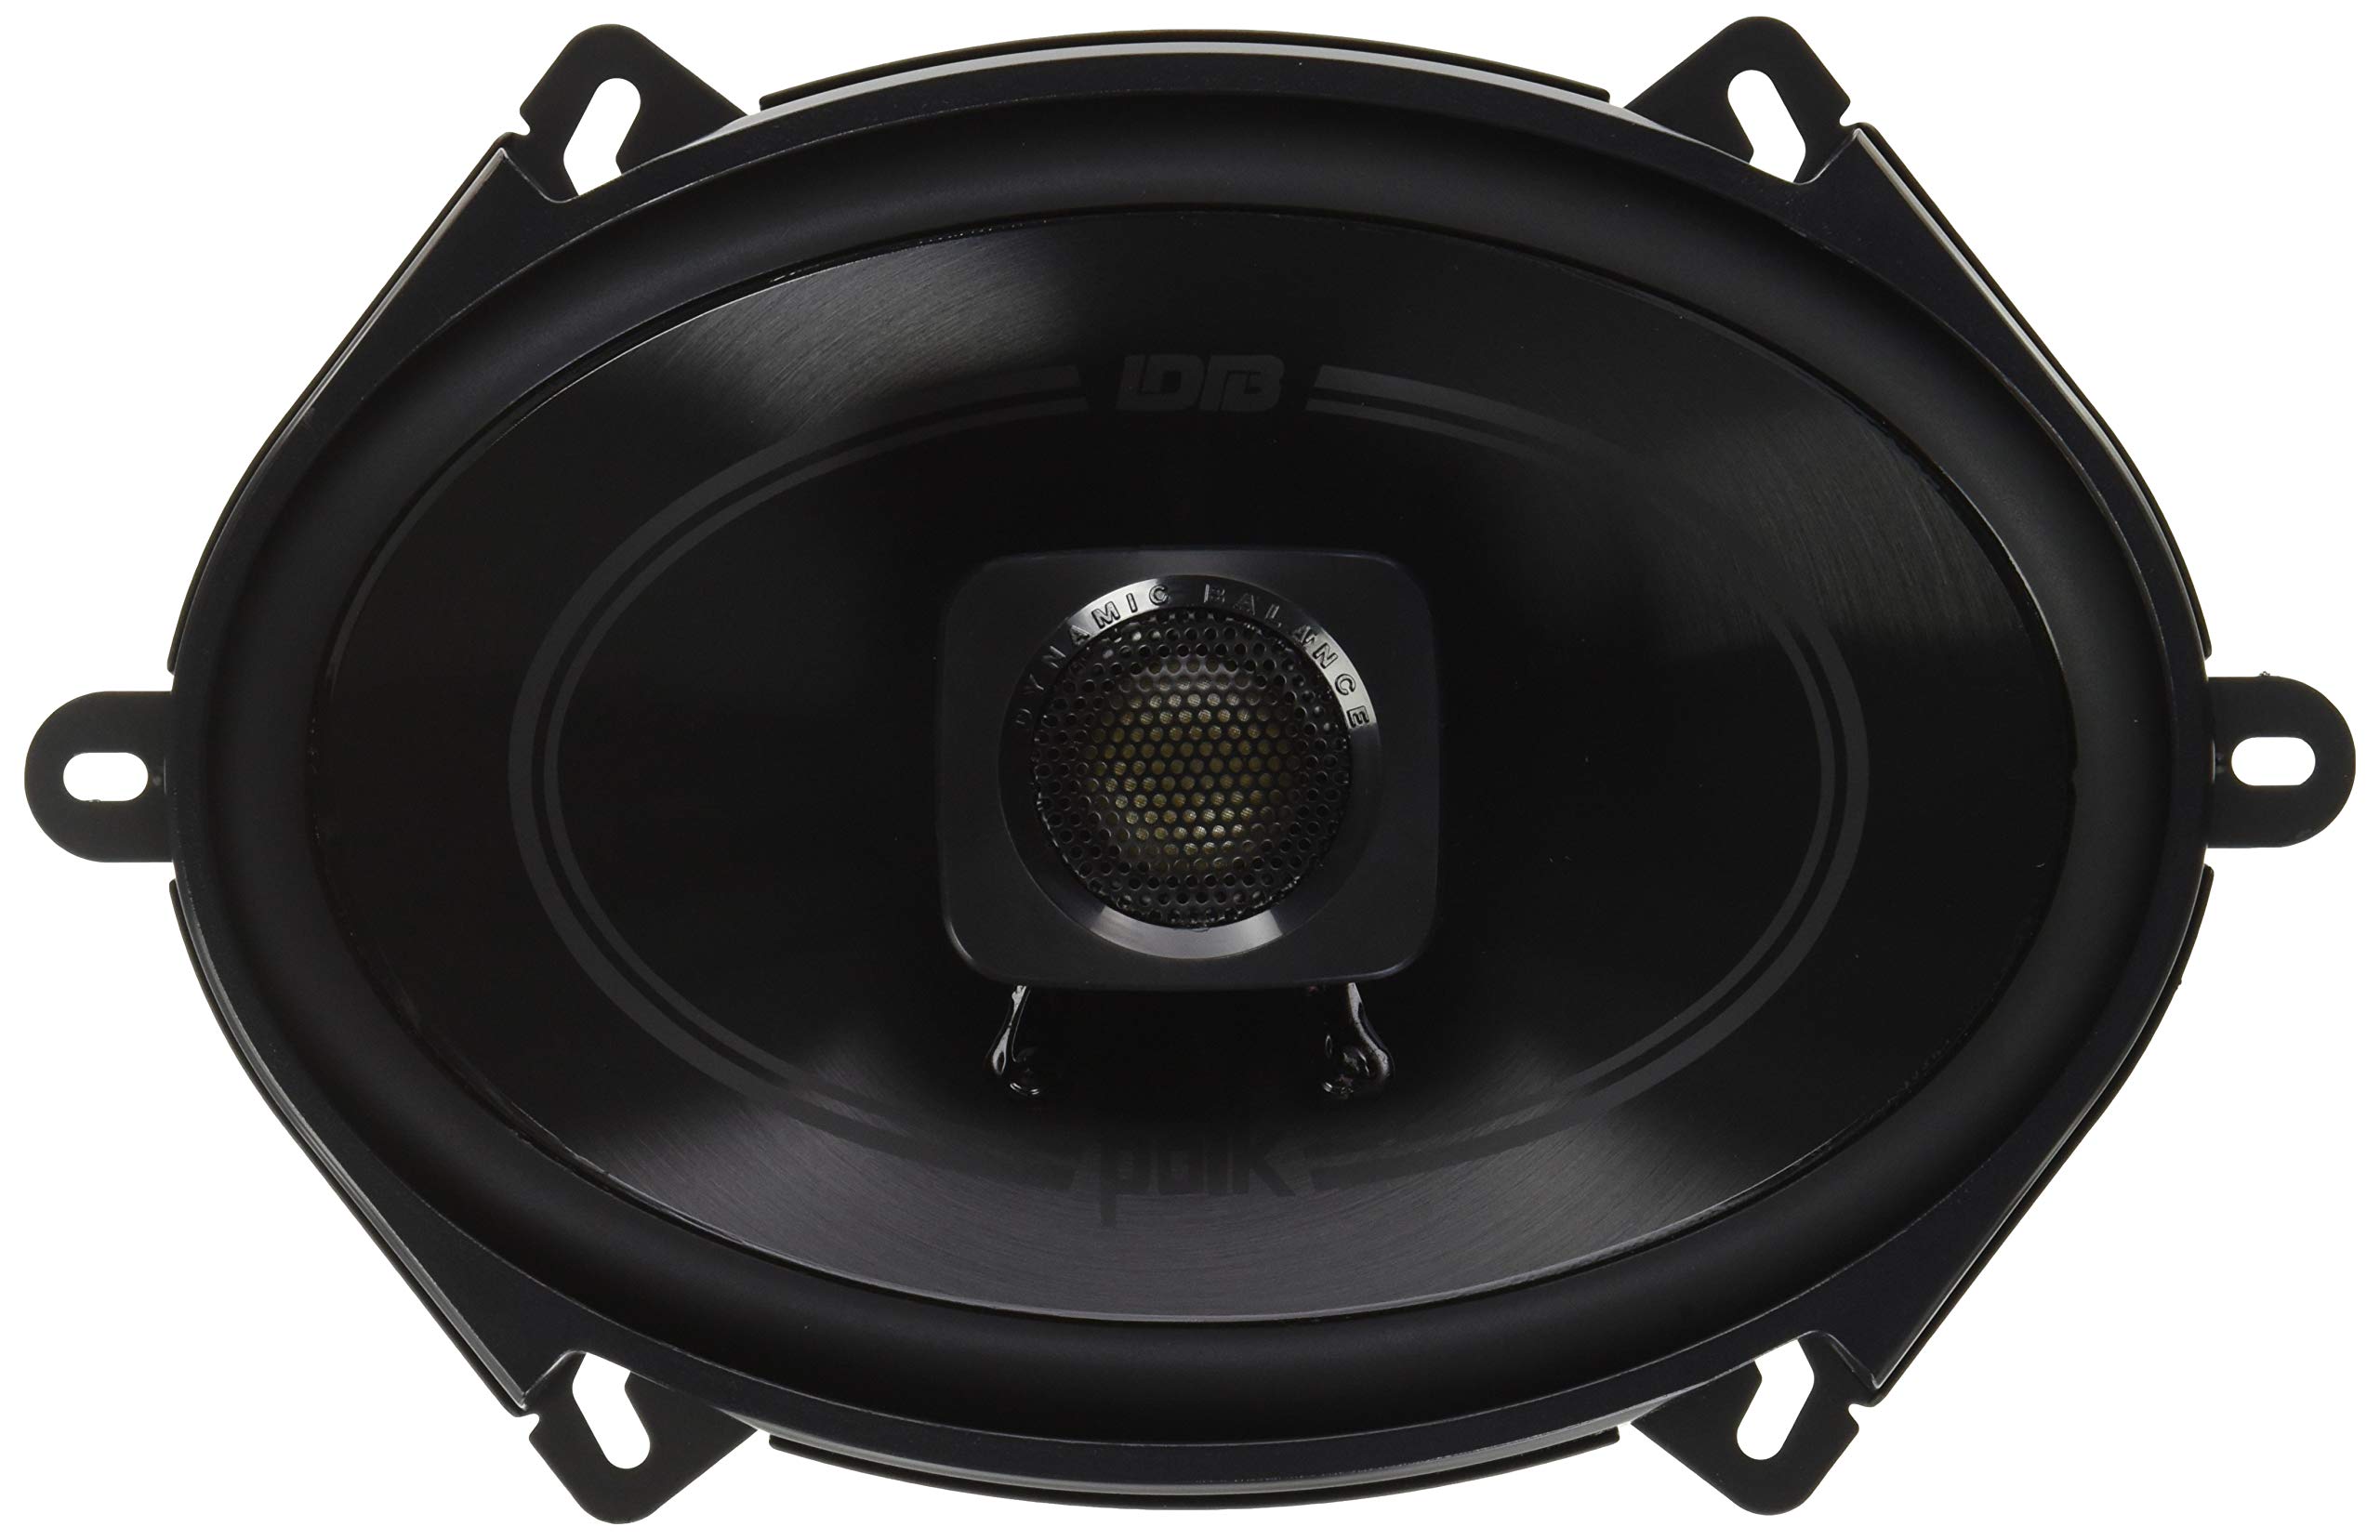 POLDB572 Polk Audio DB572 DB+ Series 5"x7" Coaxial Speakers with Marine Certification, Black - image 2 of 3